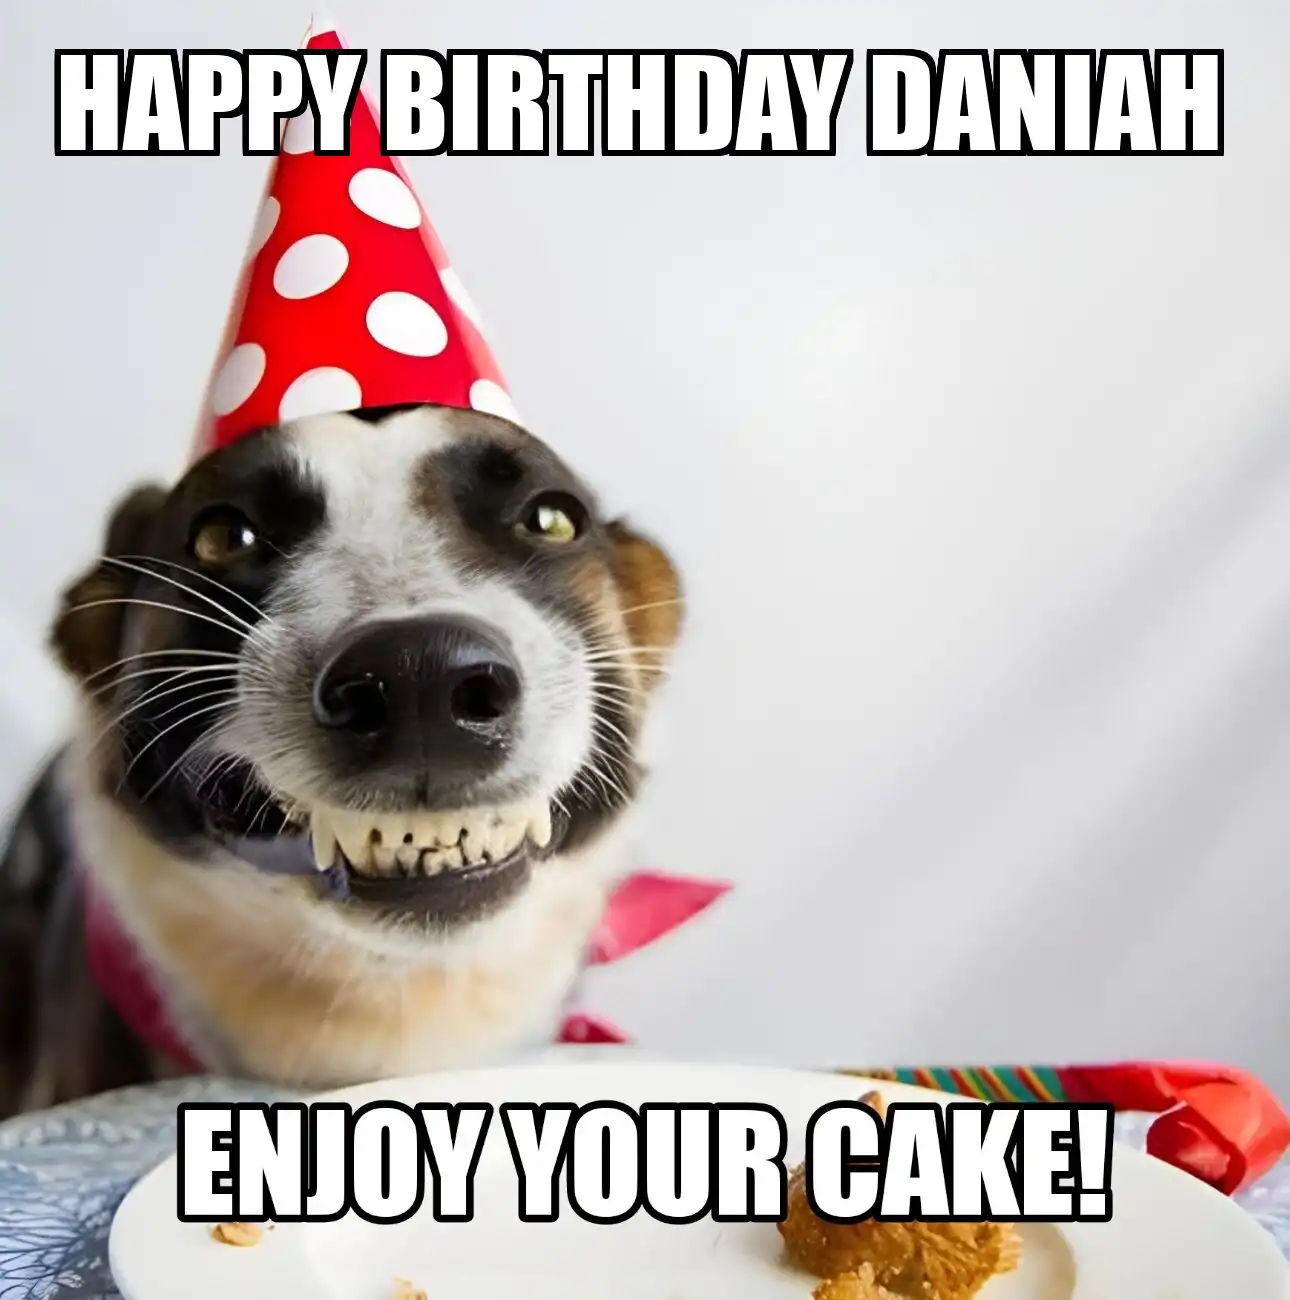 Happy Birthday Daniah Enjoy Your Cake Dog Meme